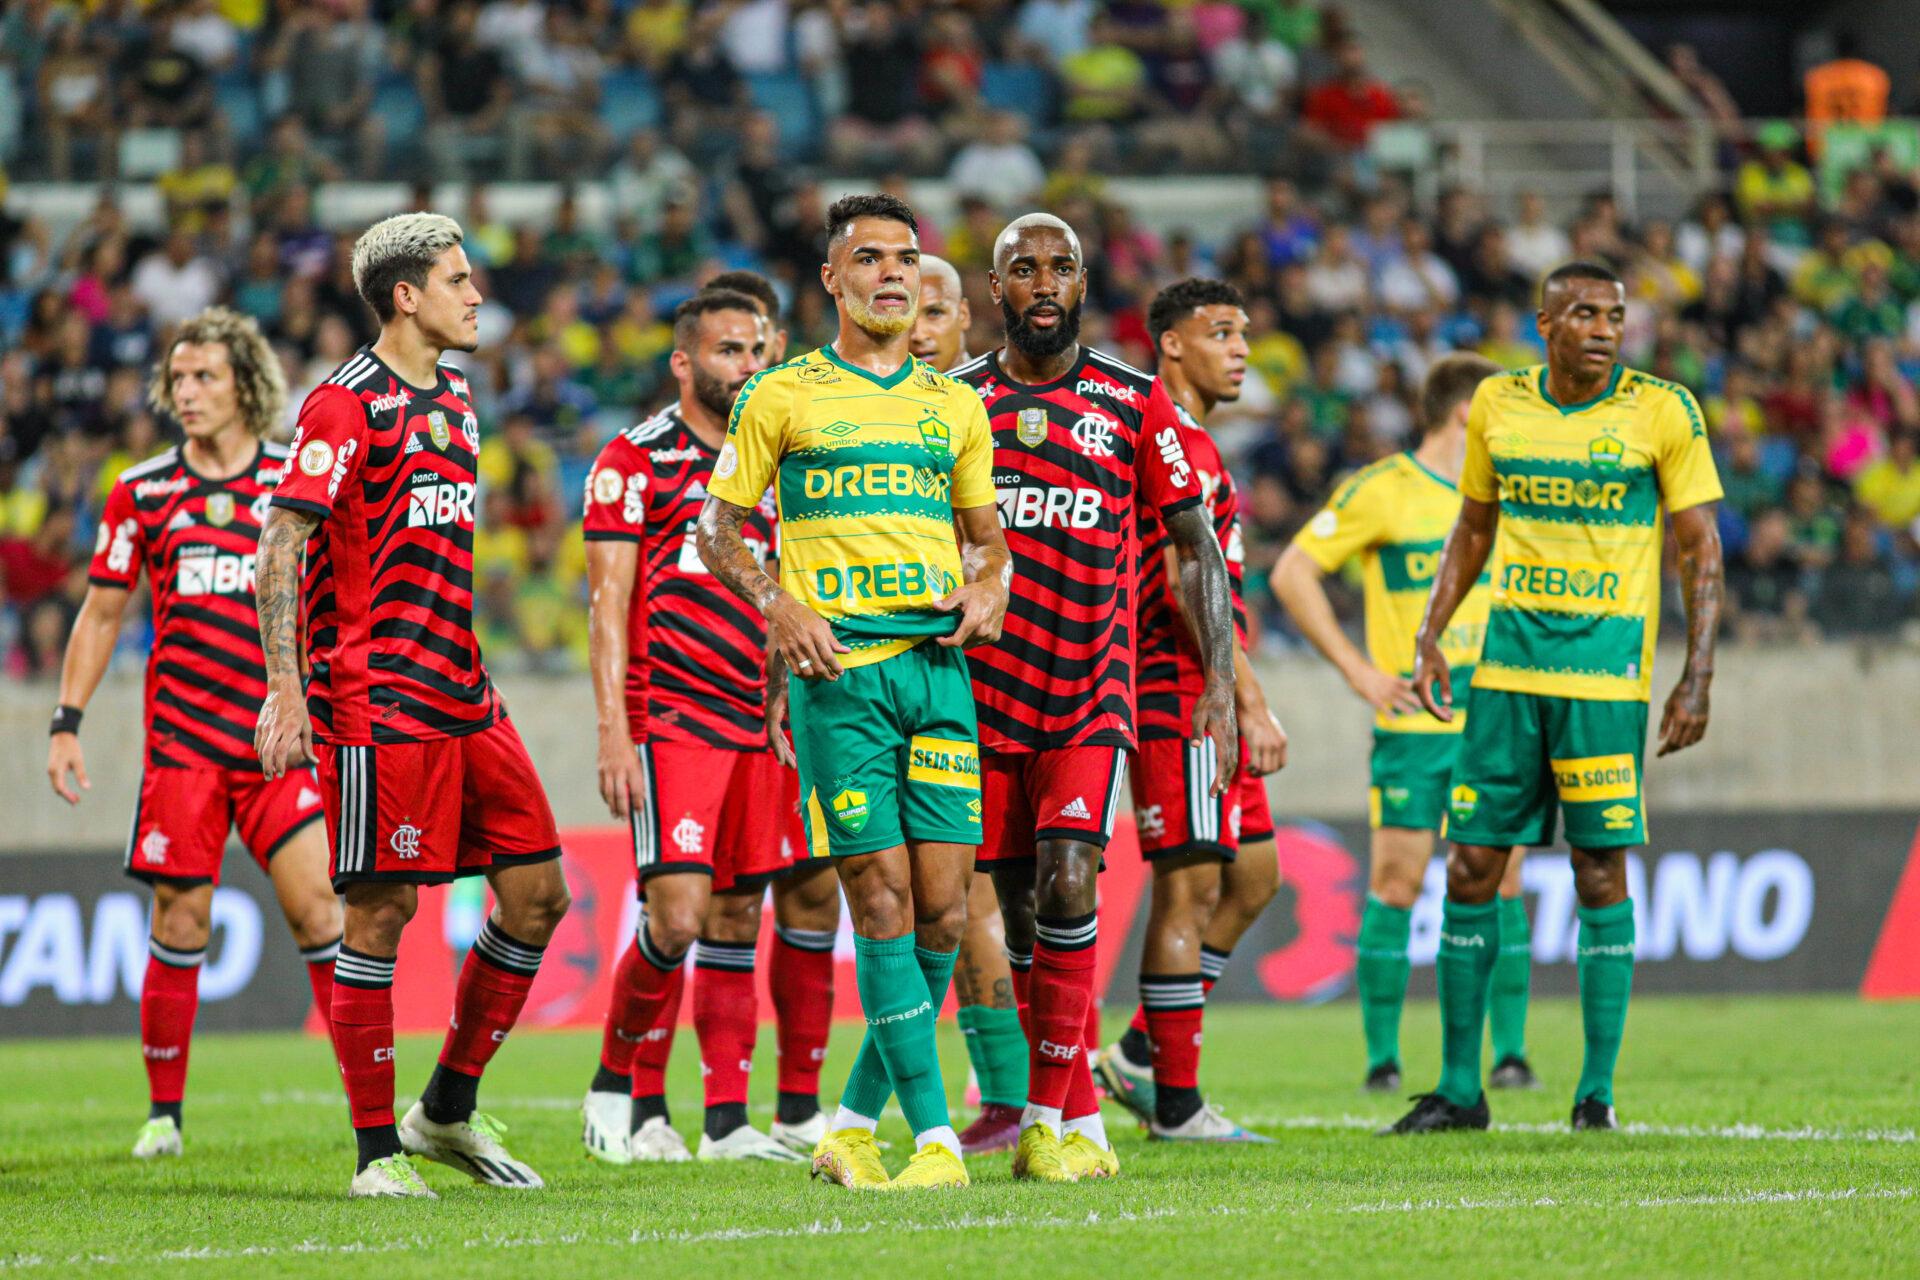 América MG: A Historic Football Club of Brazil